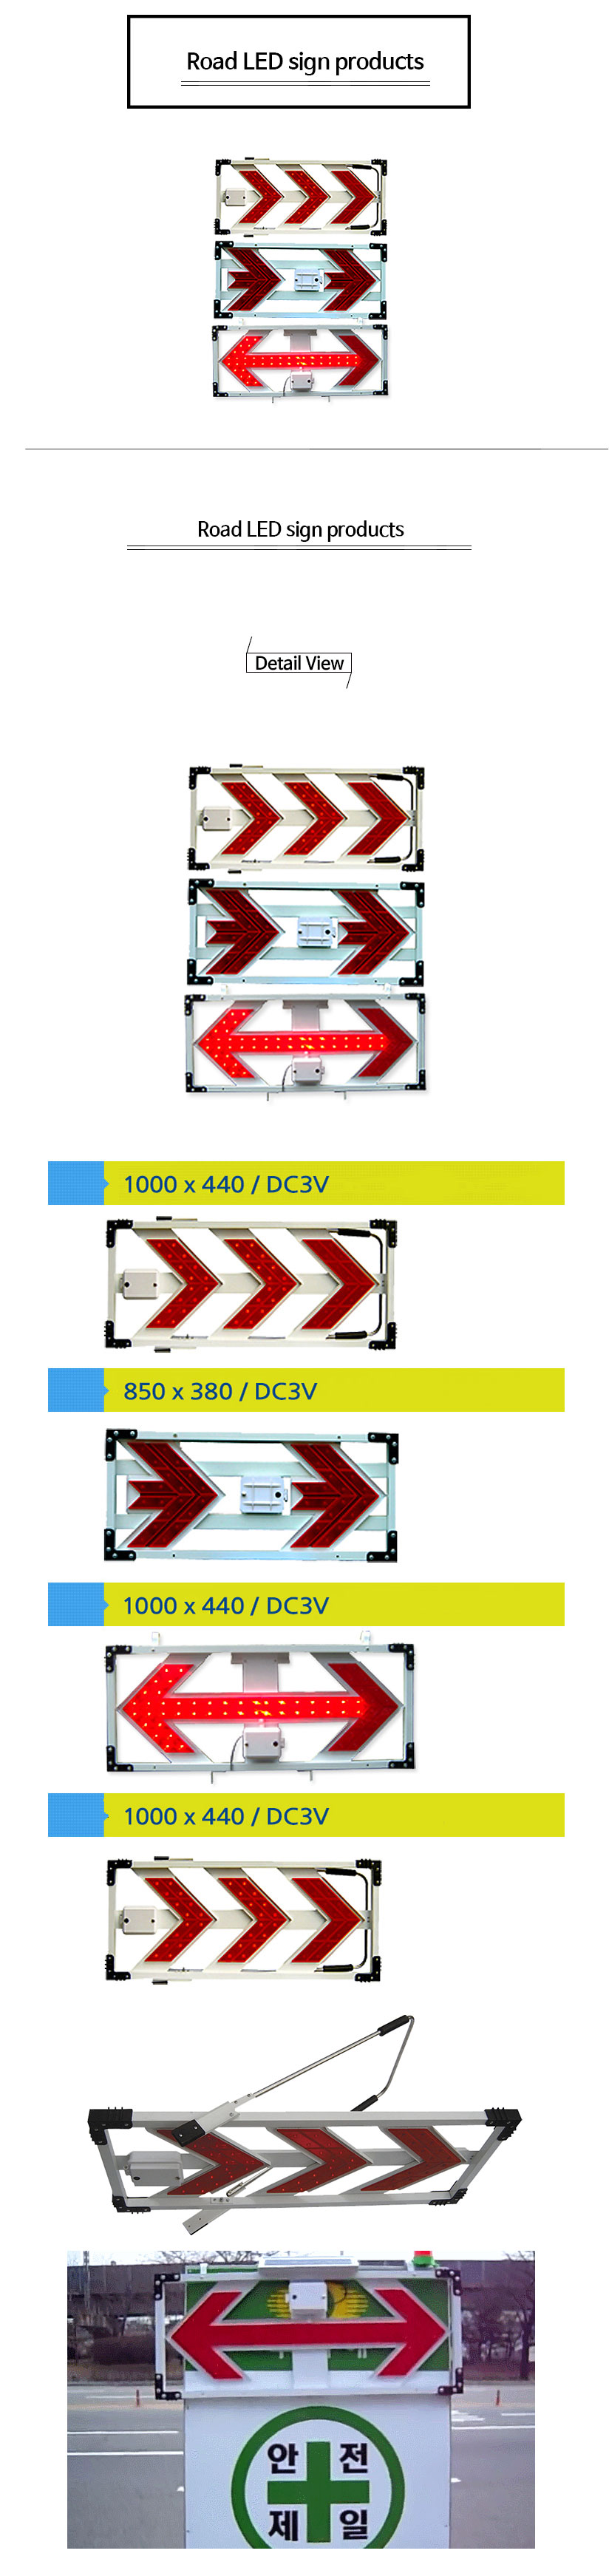 LED-휴대용-갈매기Road-LED-sign-products.jpg